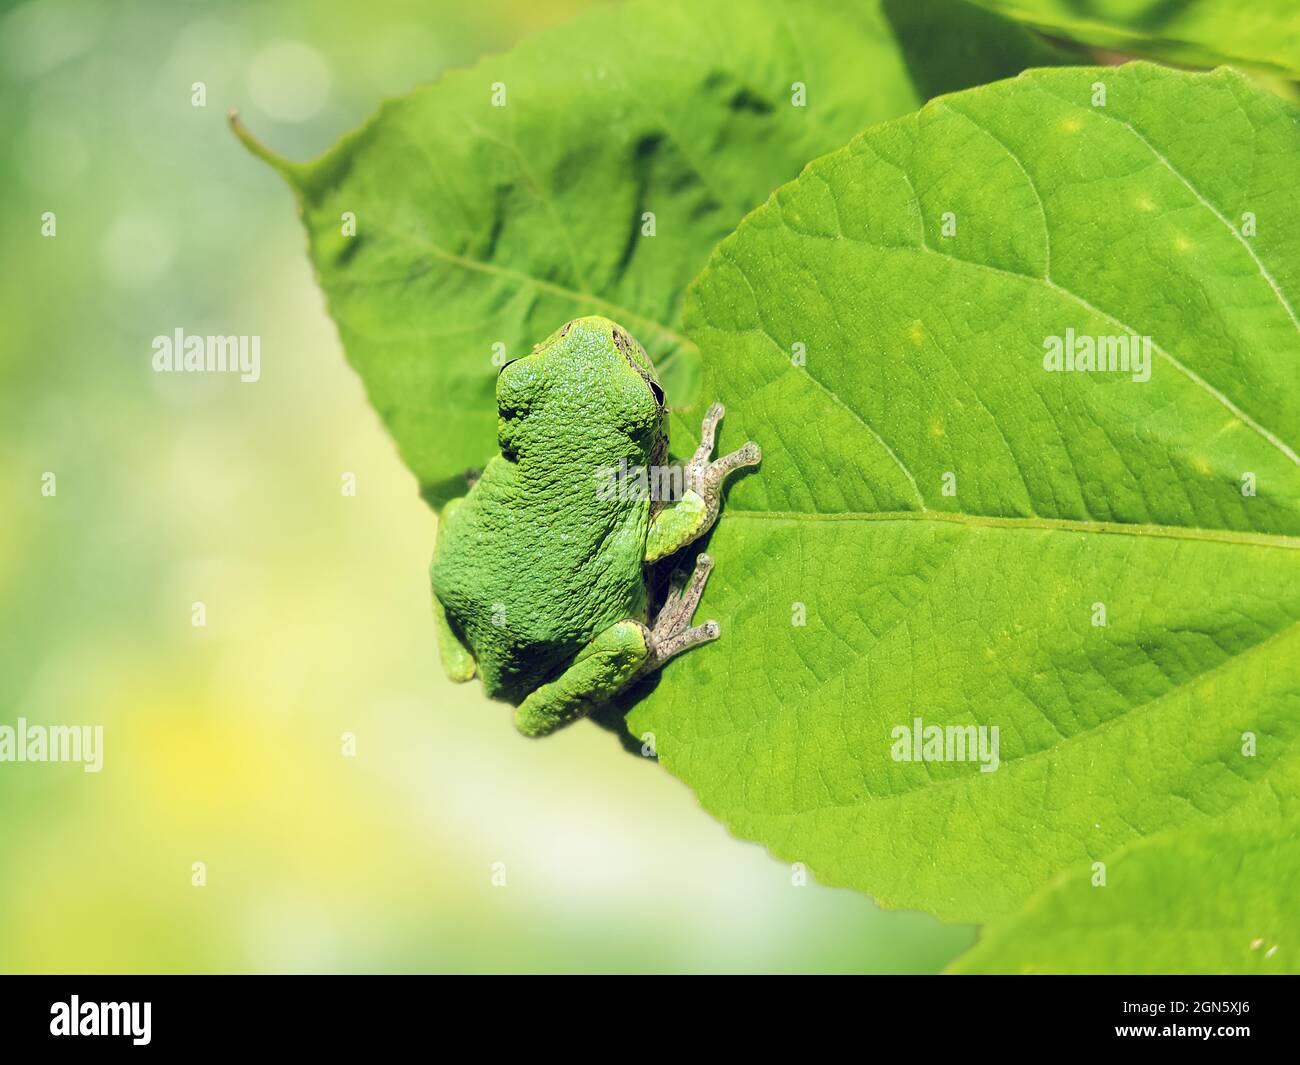 Rana verde americana su una foglia verde Foto Stock